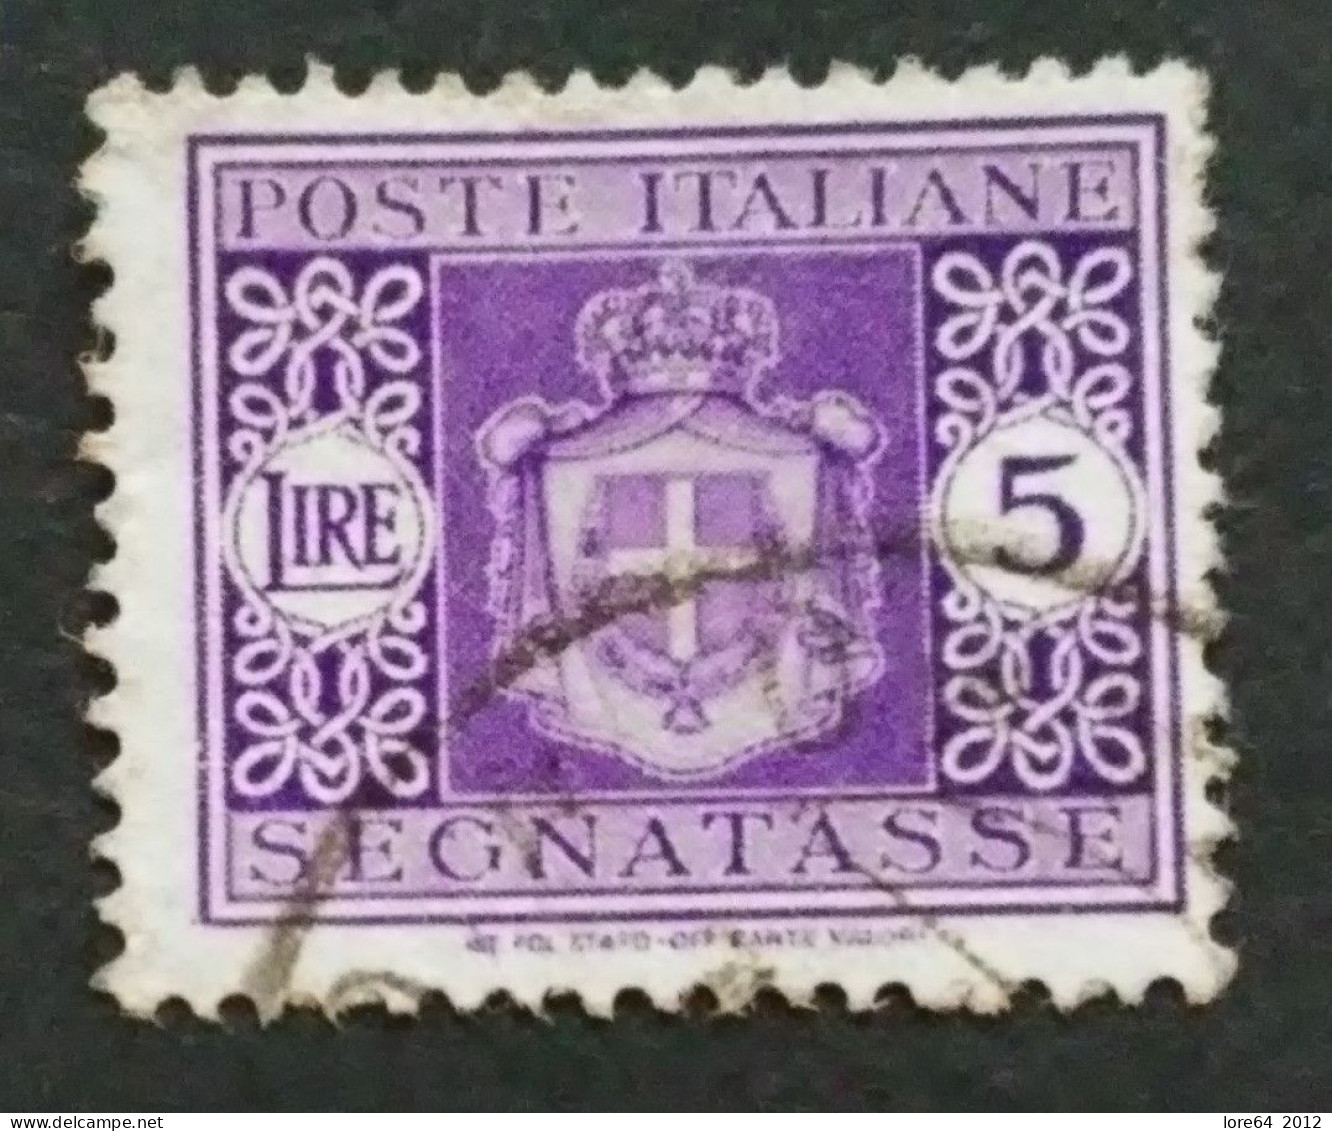 ITALIA 1945 - N° Catalogo Unificato 83 - Postage Due